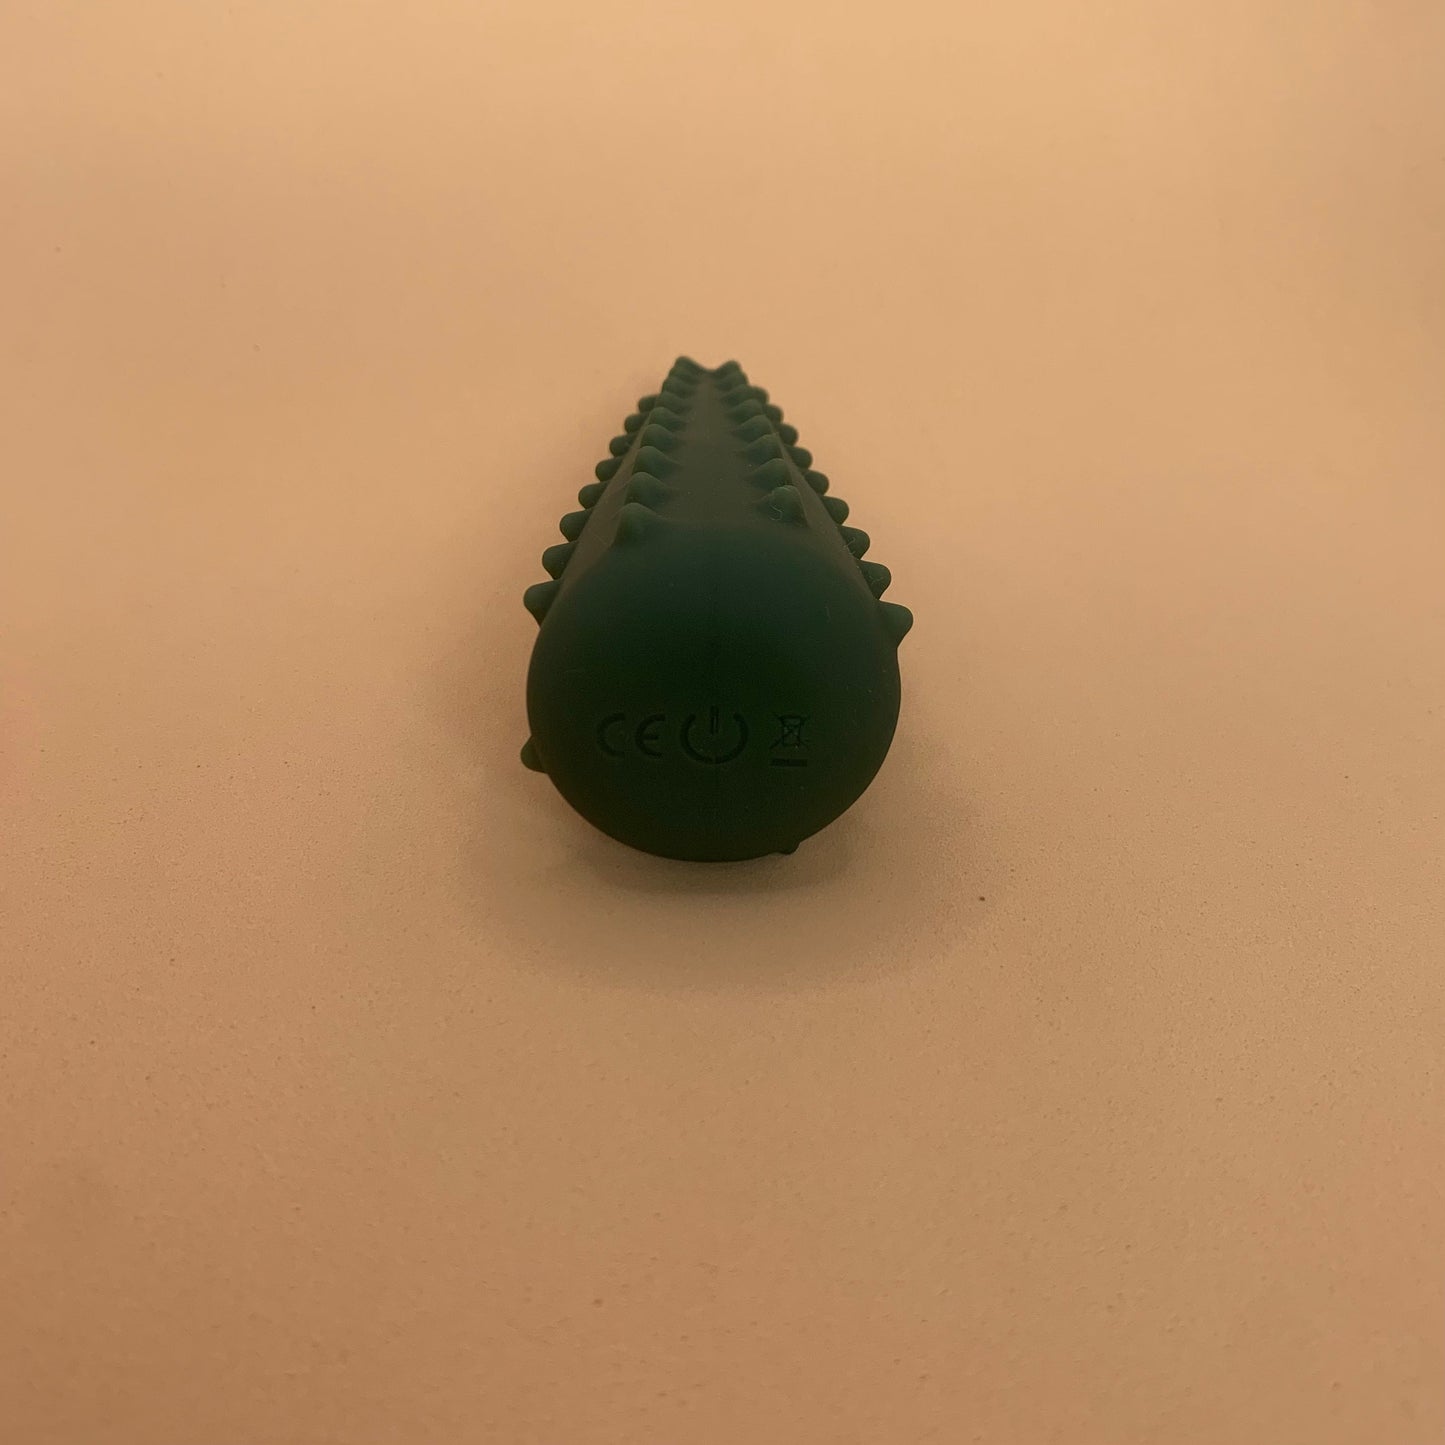 cone shaped cactus-like vibrating dildo standing